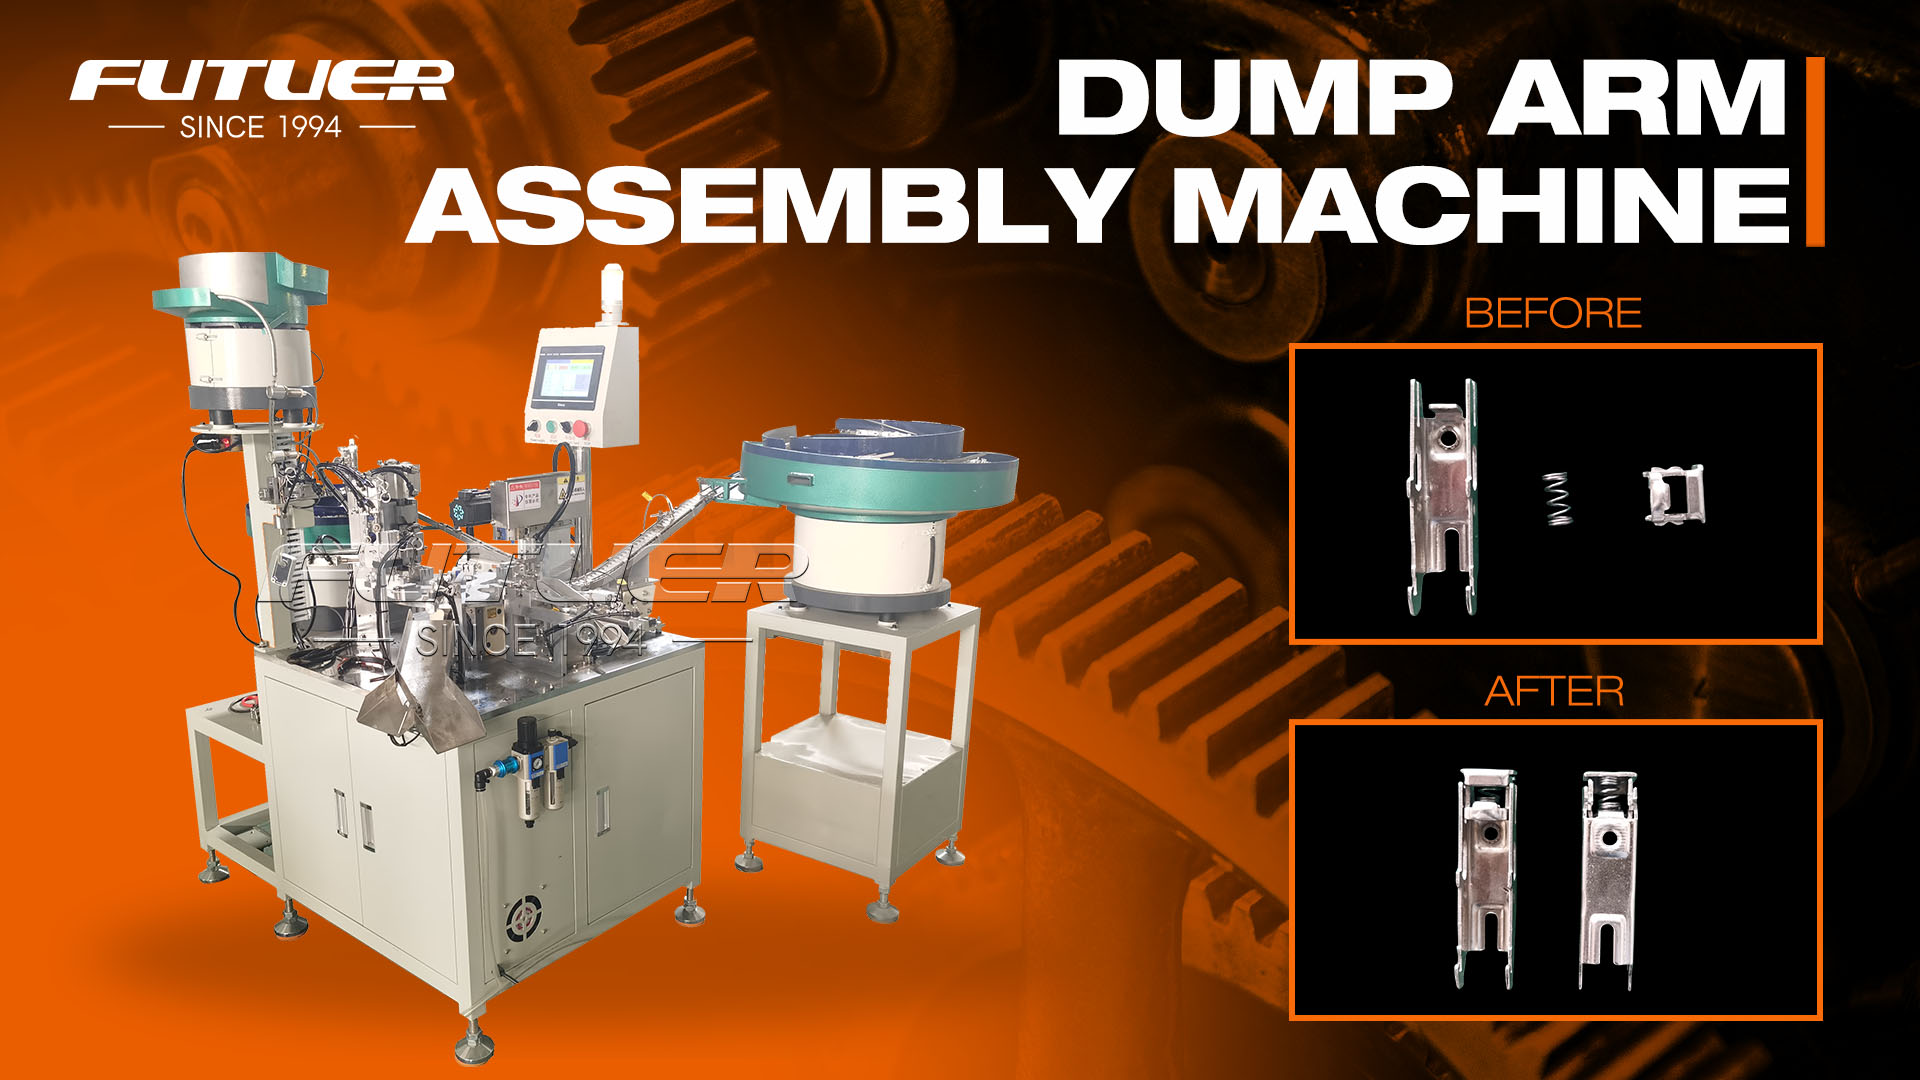 Dump arm assembly machine